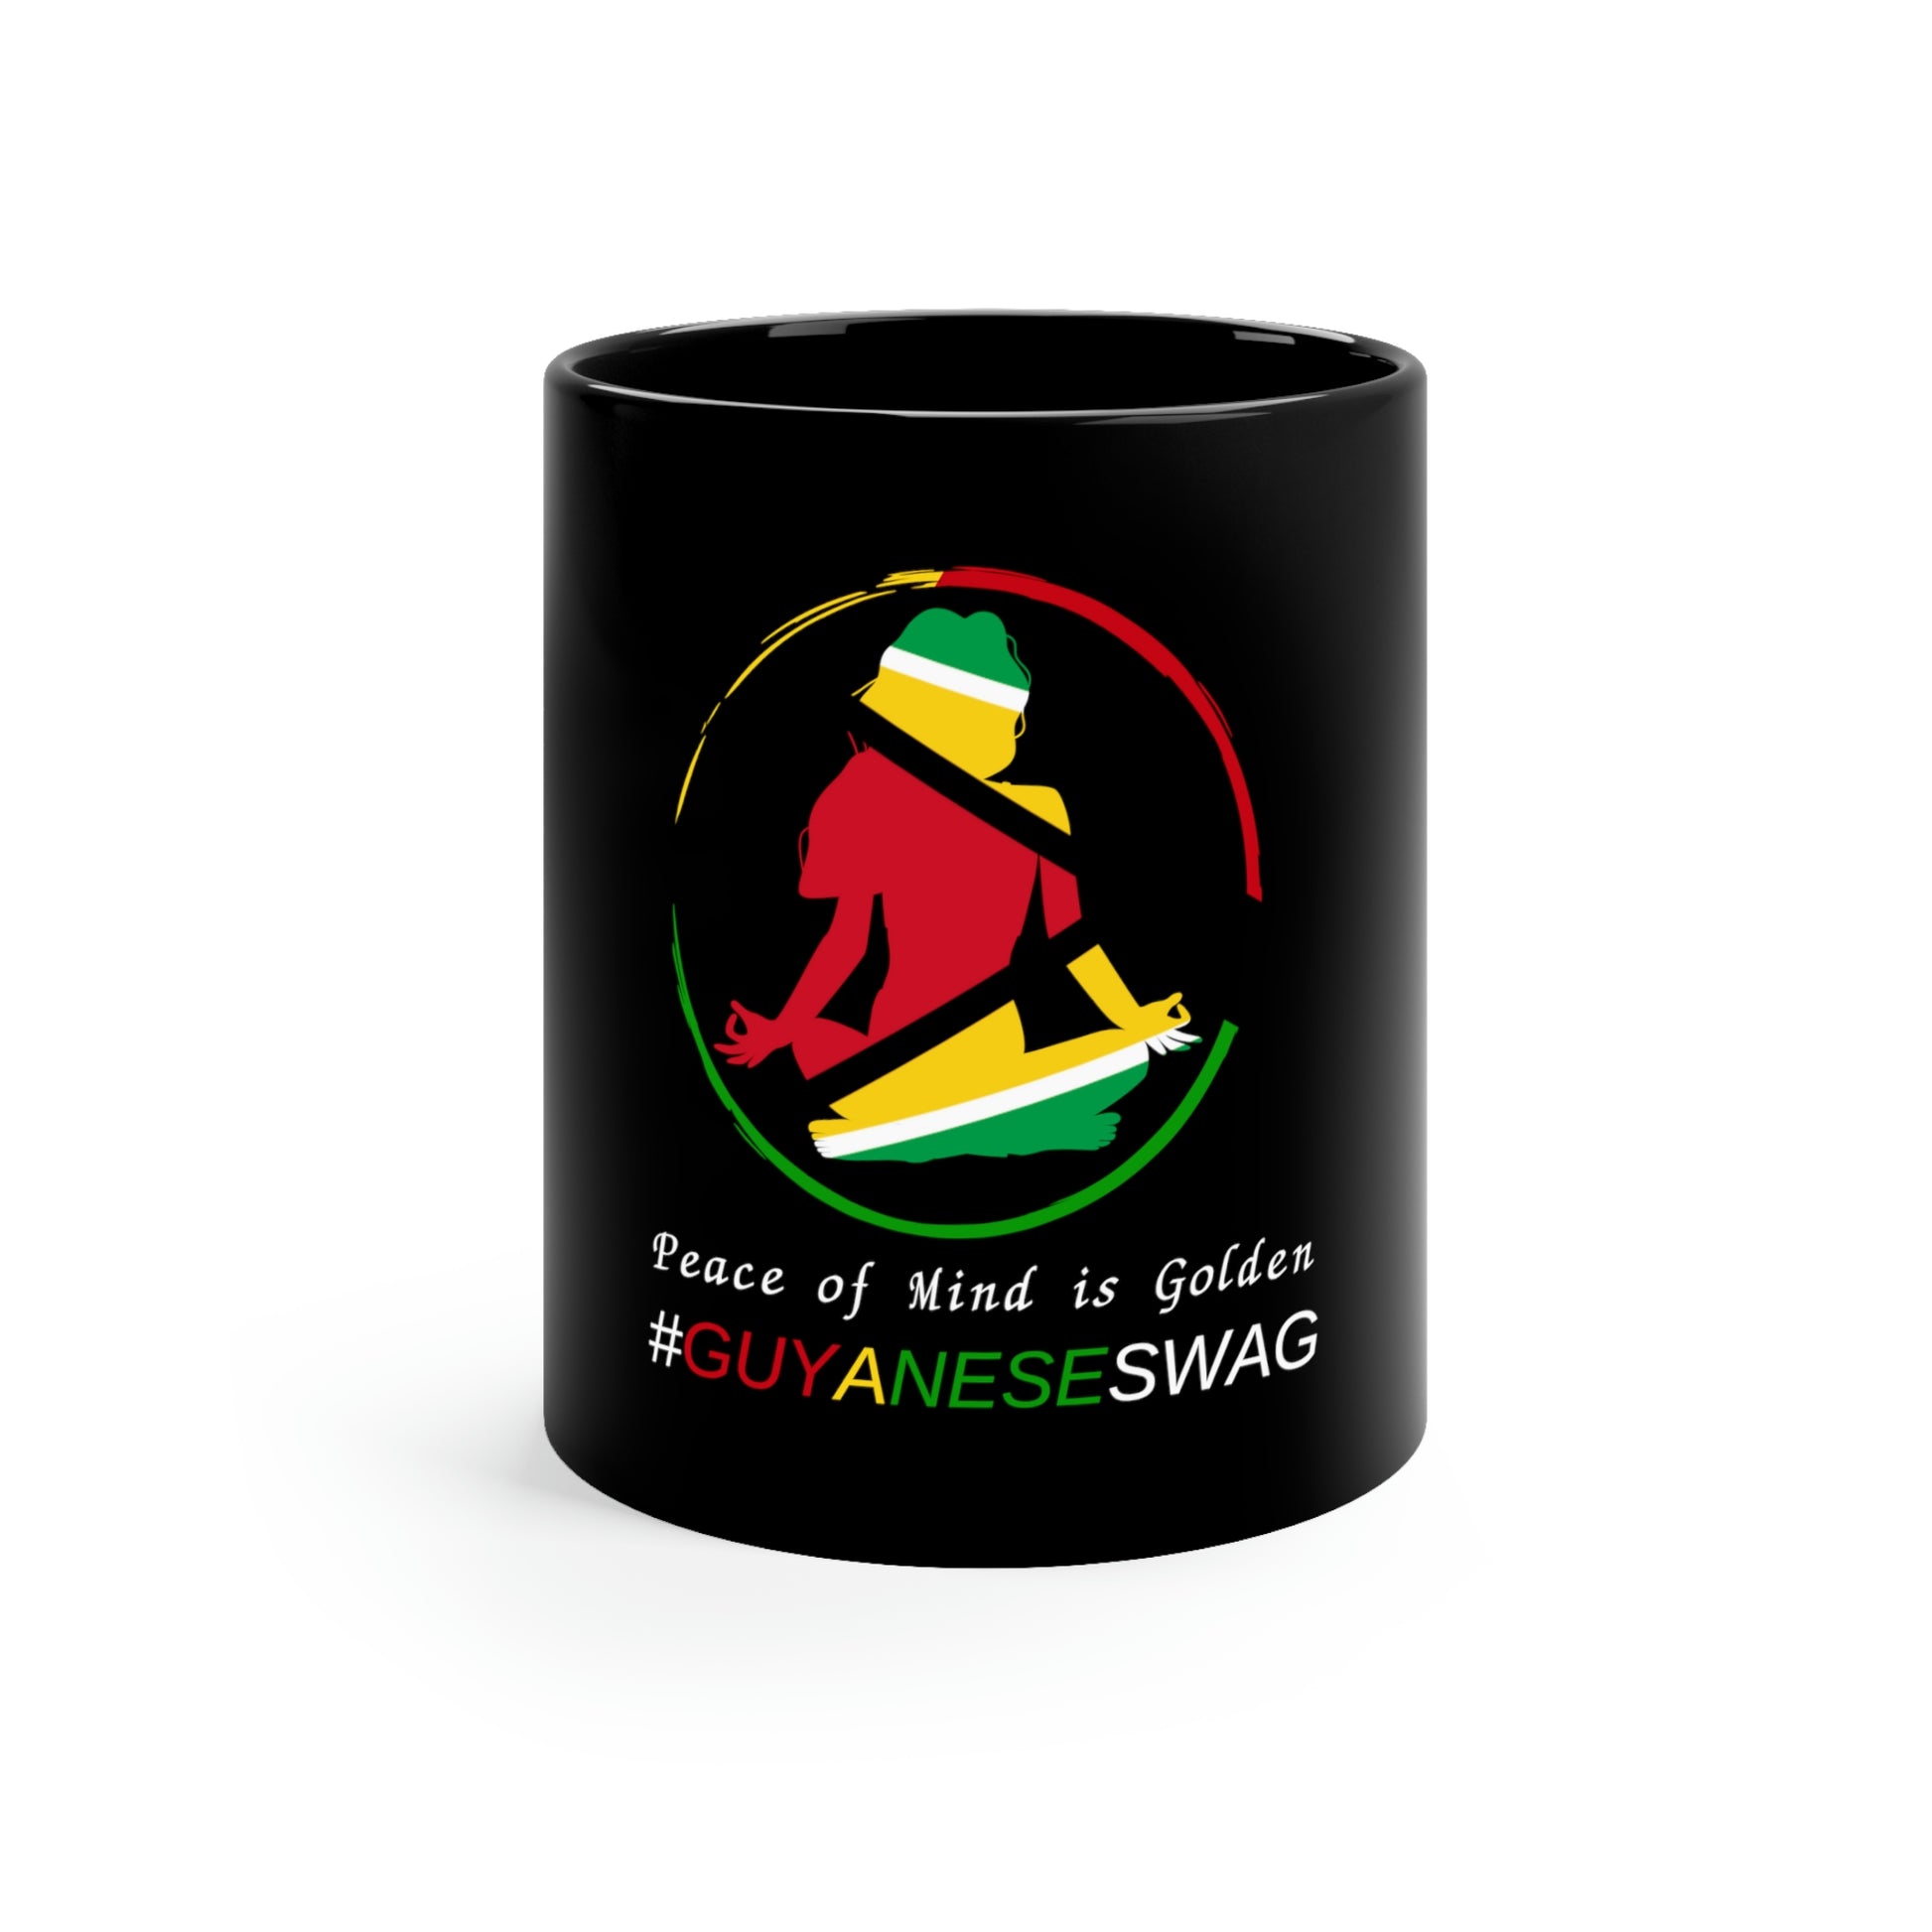 "Peace of Mind is Golden" 11oz Black Mug by Guyanese Swag.